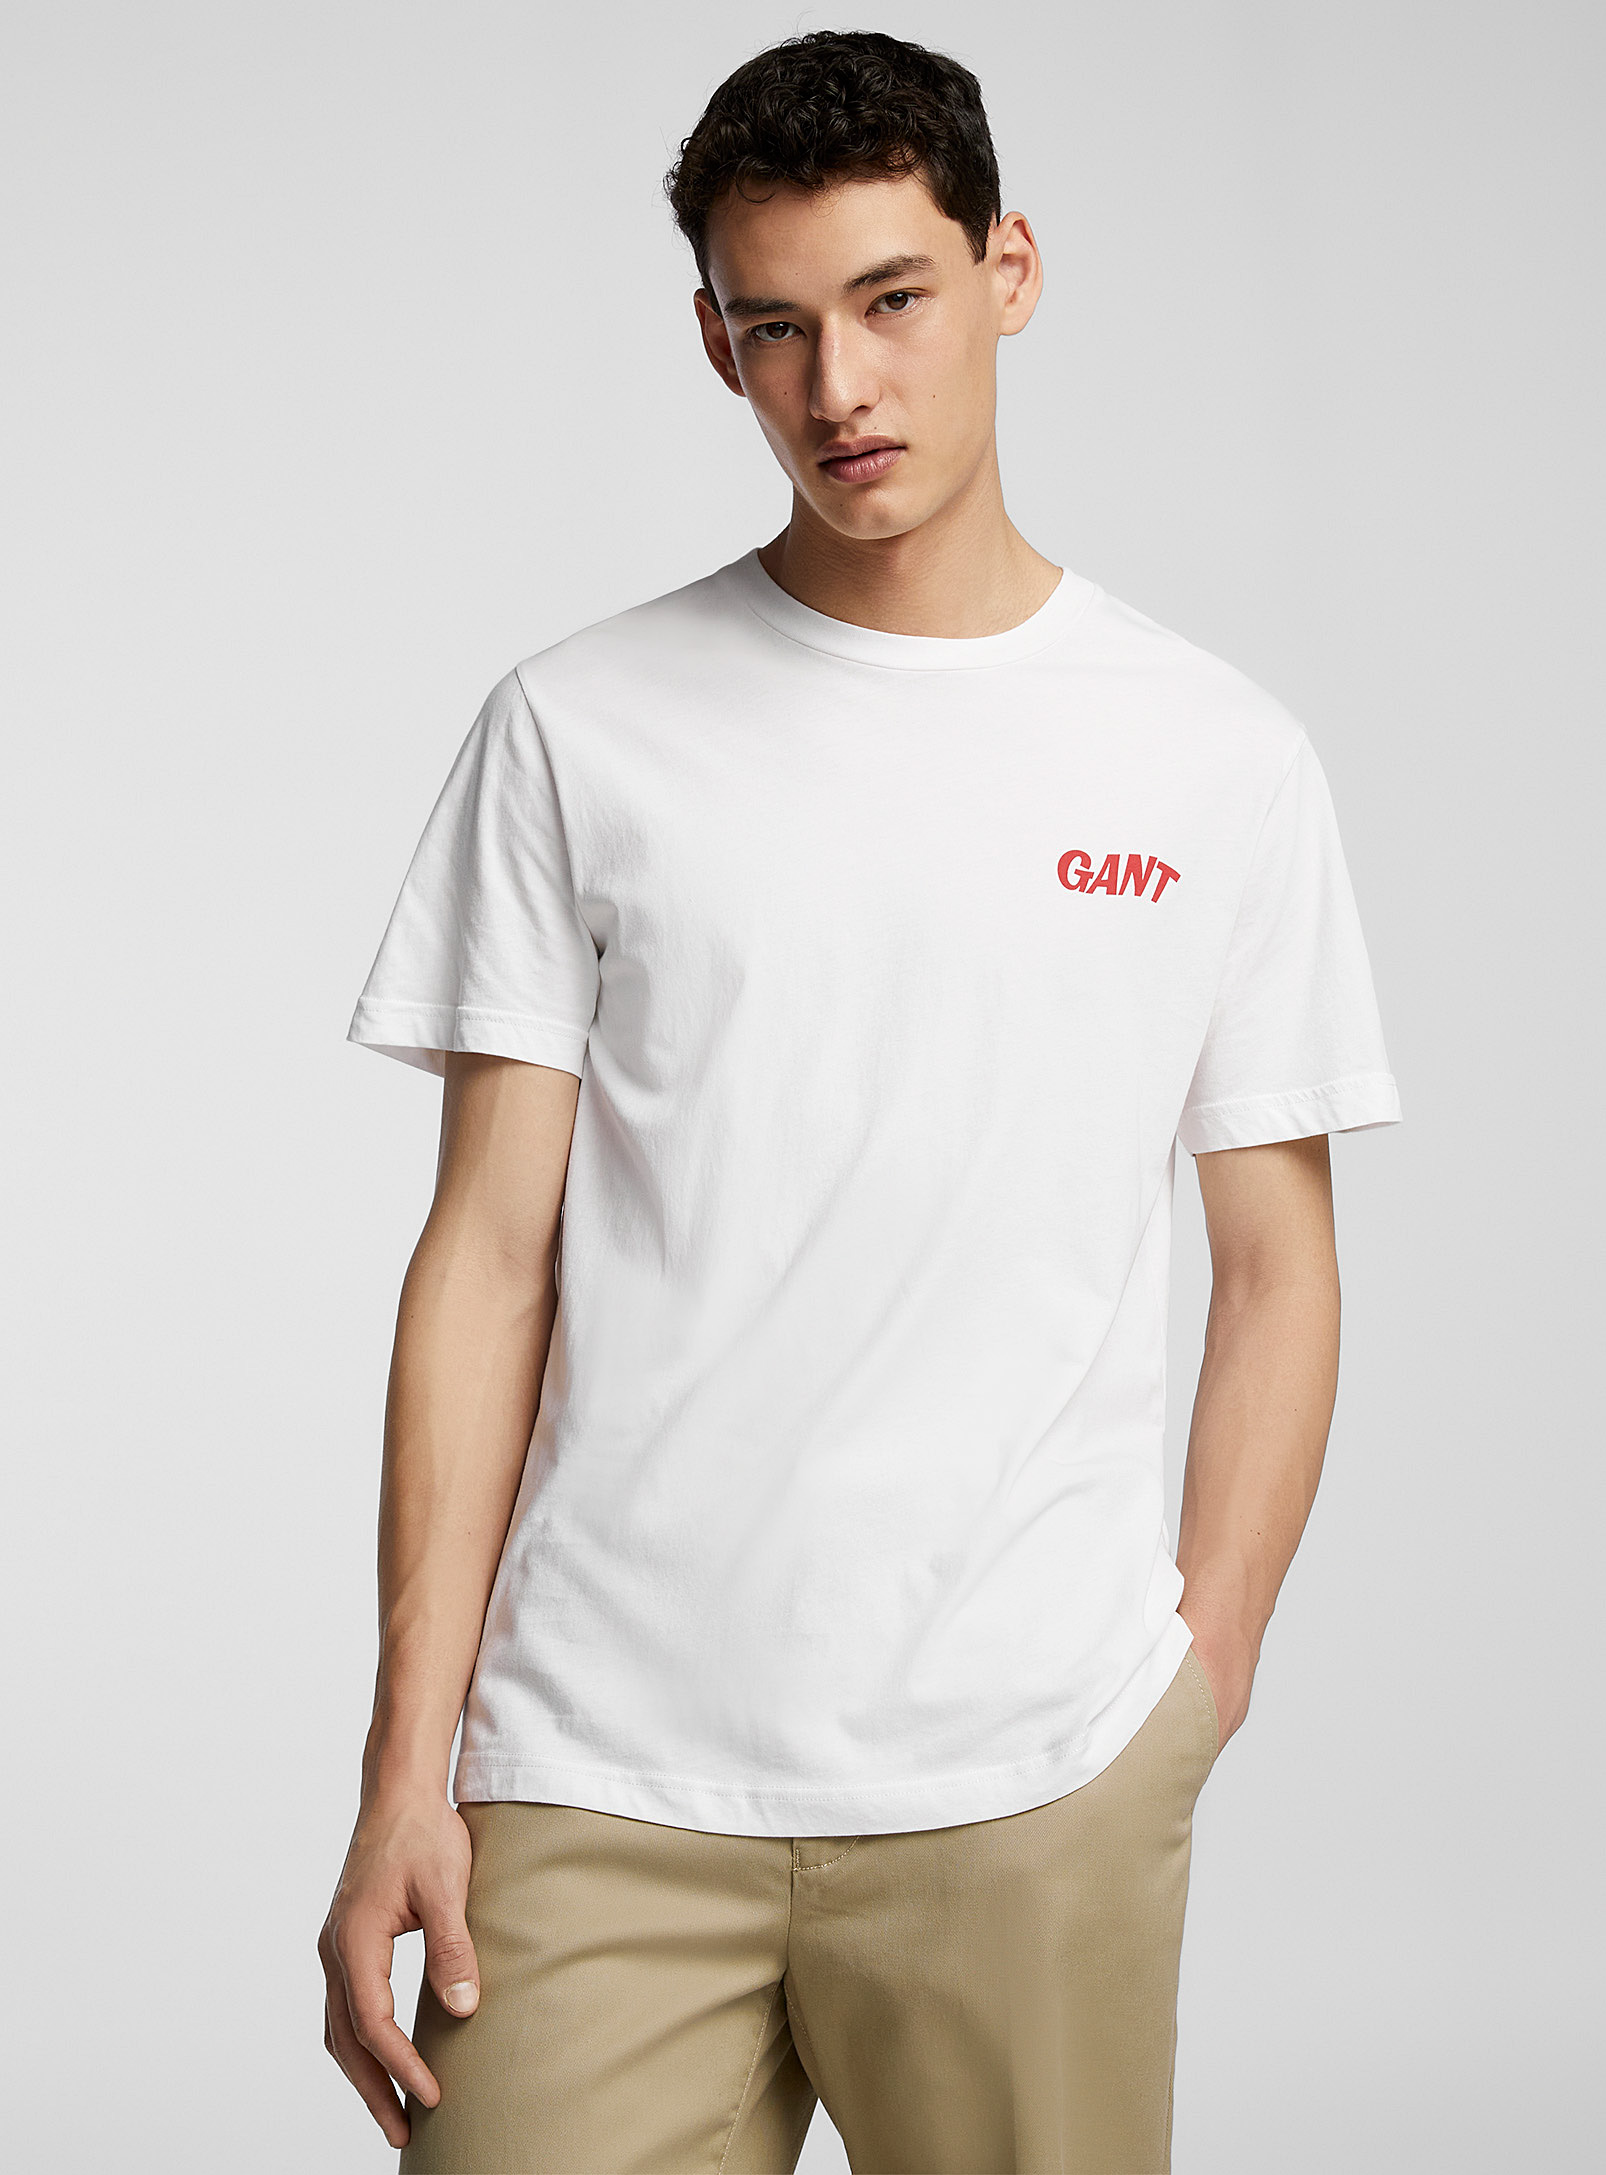 GANT - Le t-shirt Surf Academy